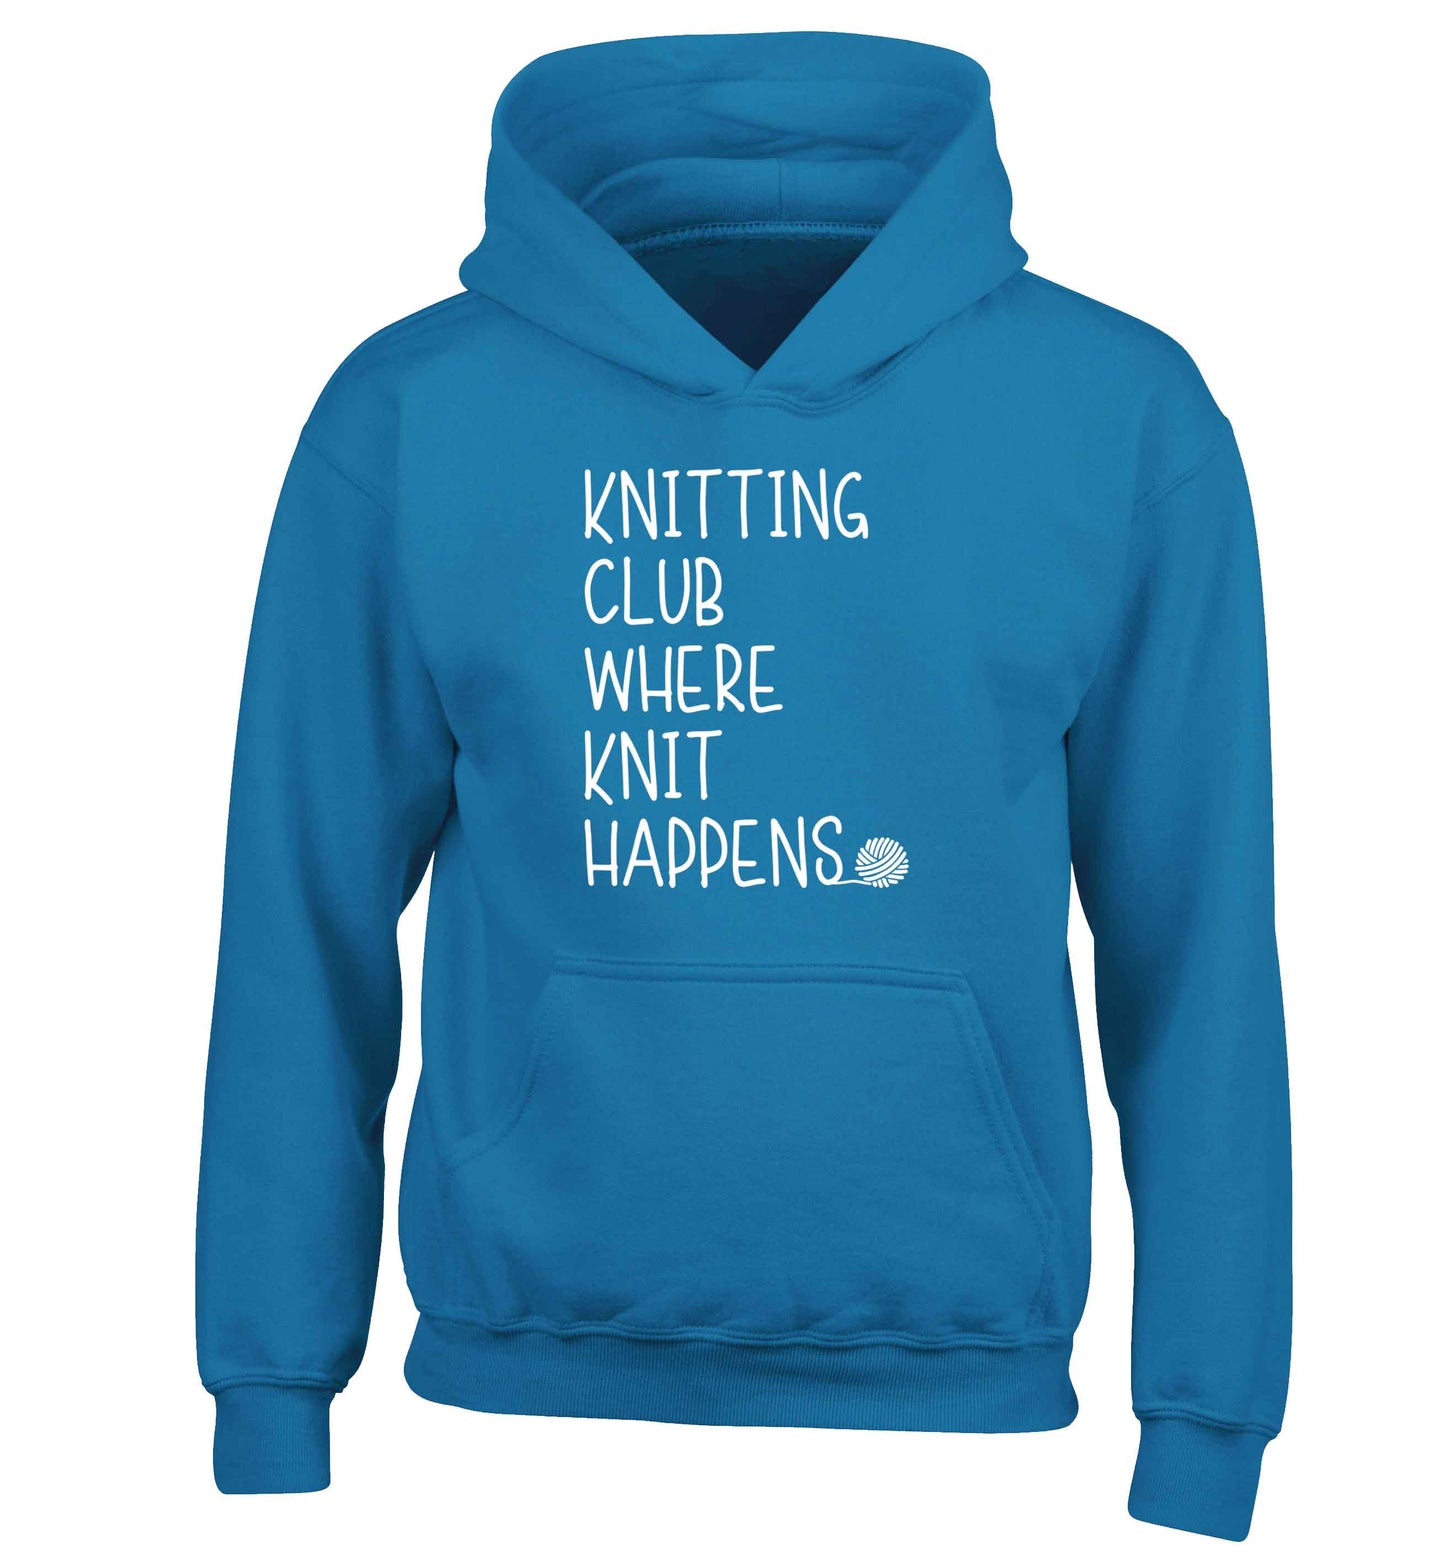 Knitting club where knit happens children's blue hoodie 12-13 Years